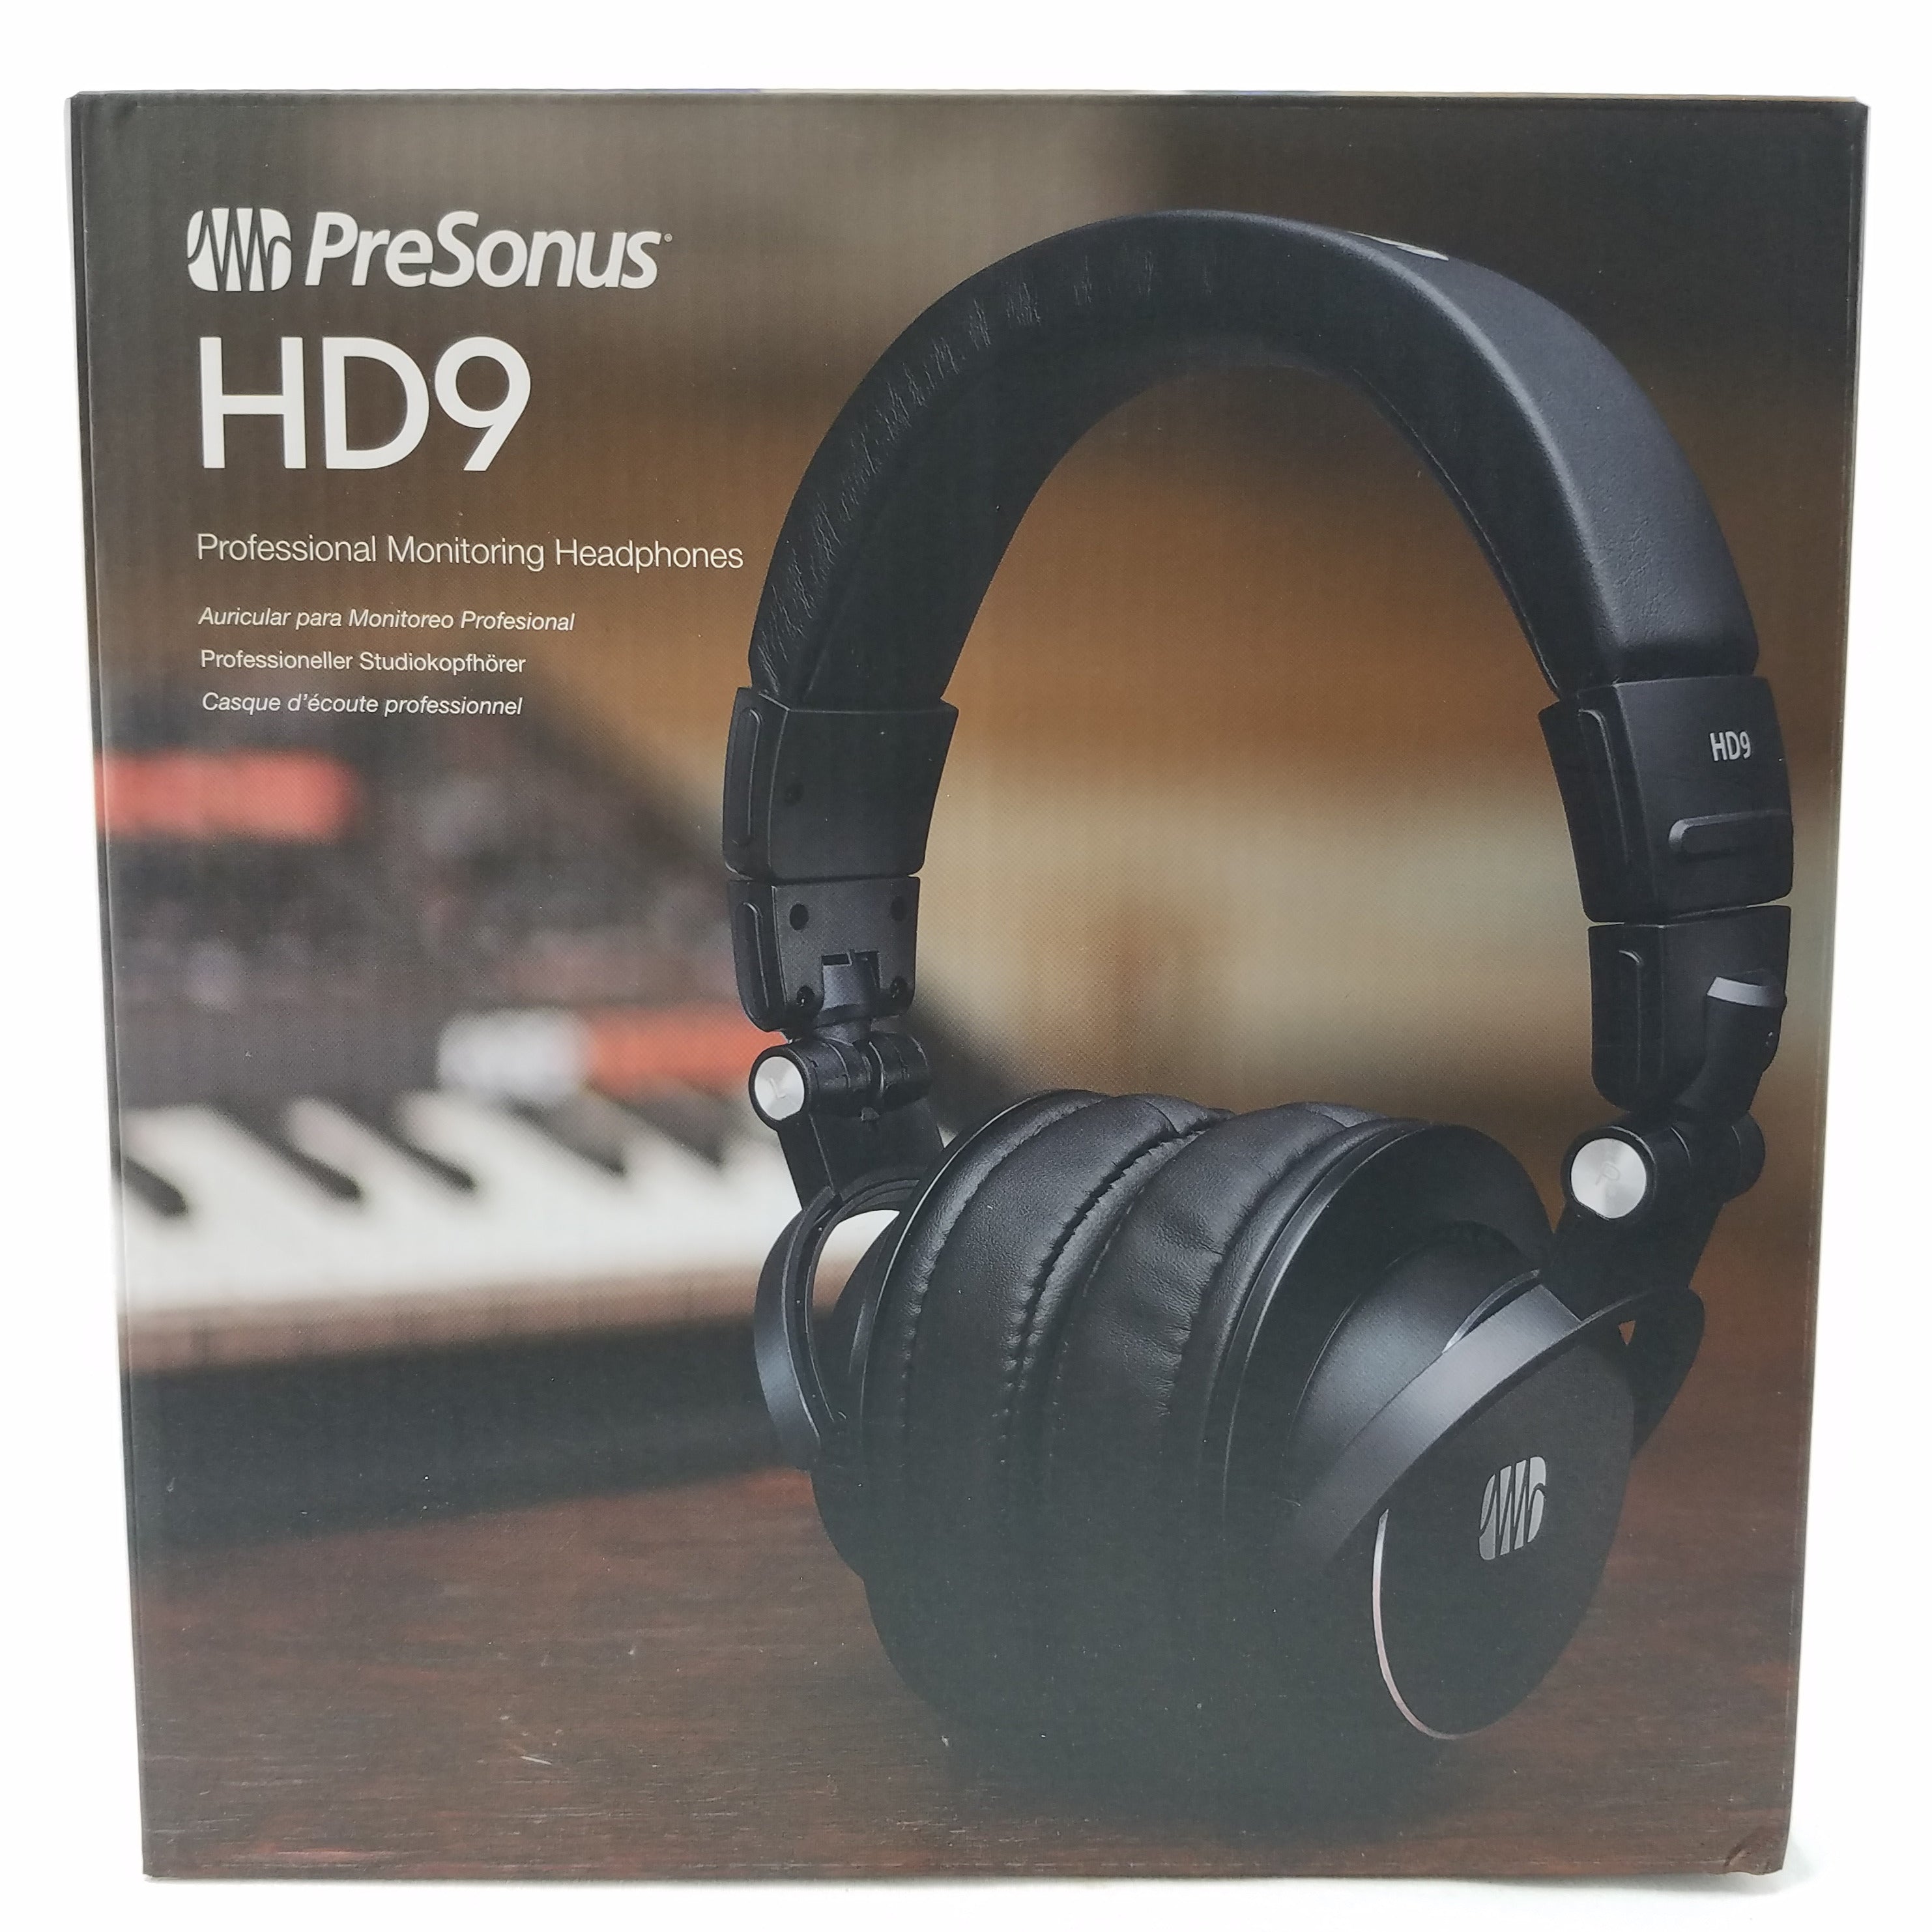 PreSonus HD9 Professional Monitoring Headphones Great for Recording & Podcasting